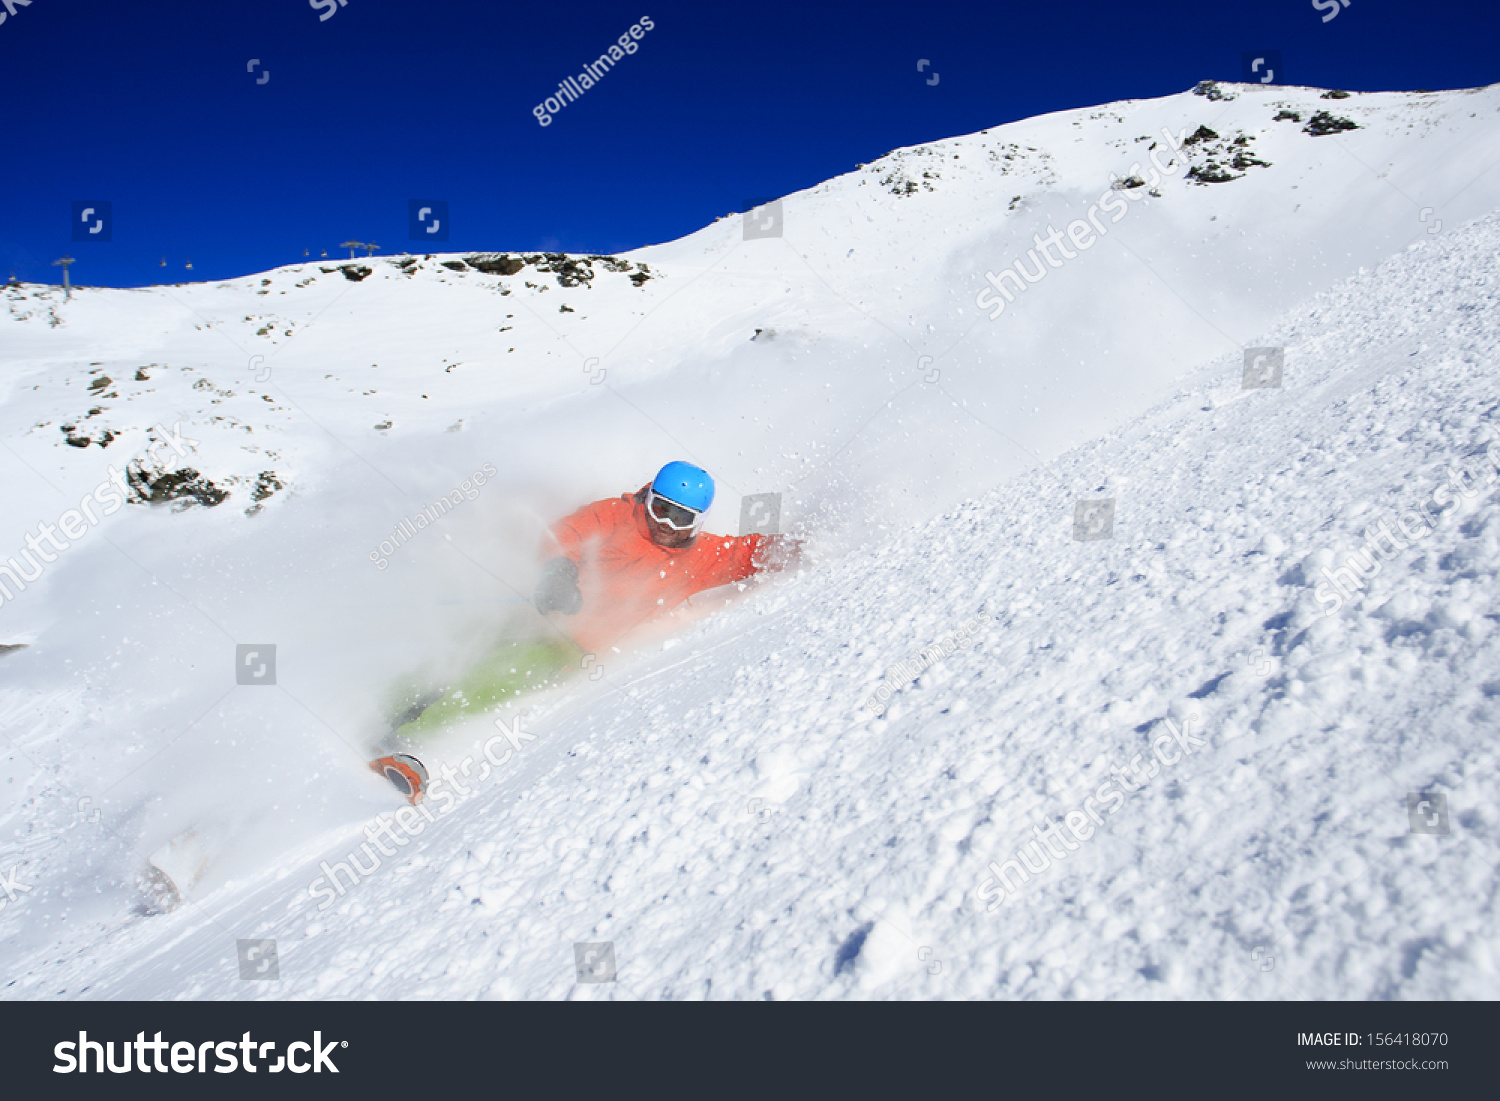 Skiing, Skier, Freeride in fresh powder snow - man skiing downhill #156418070